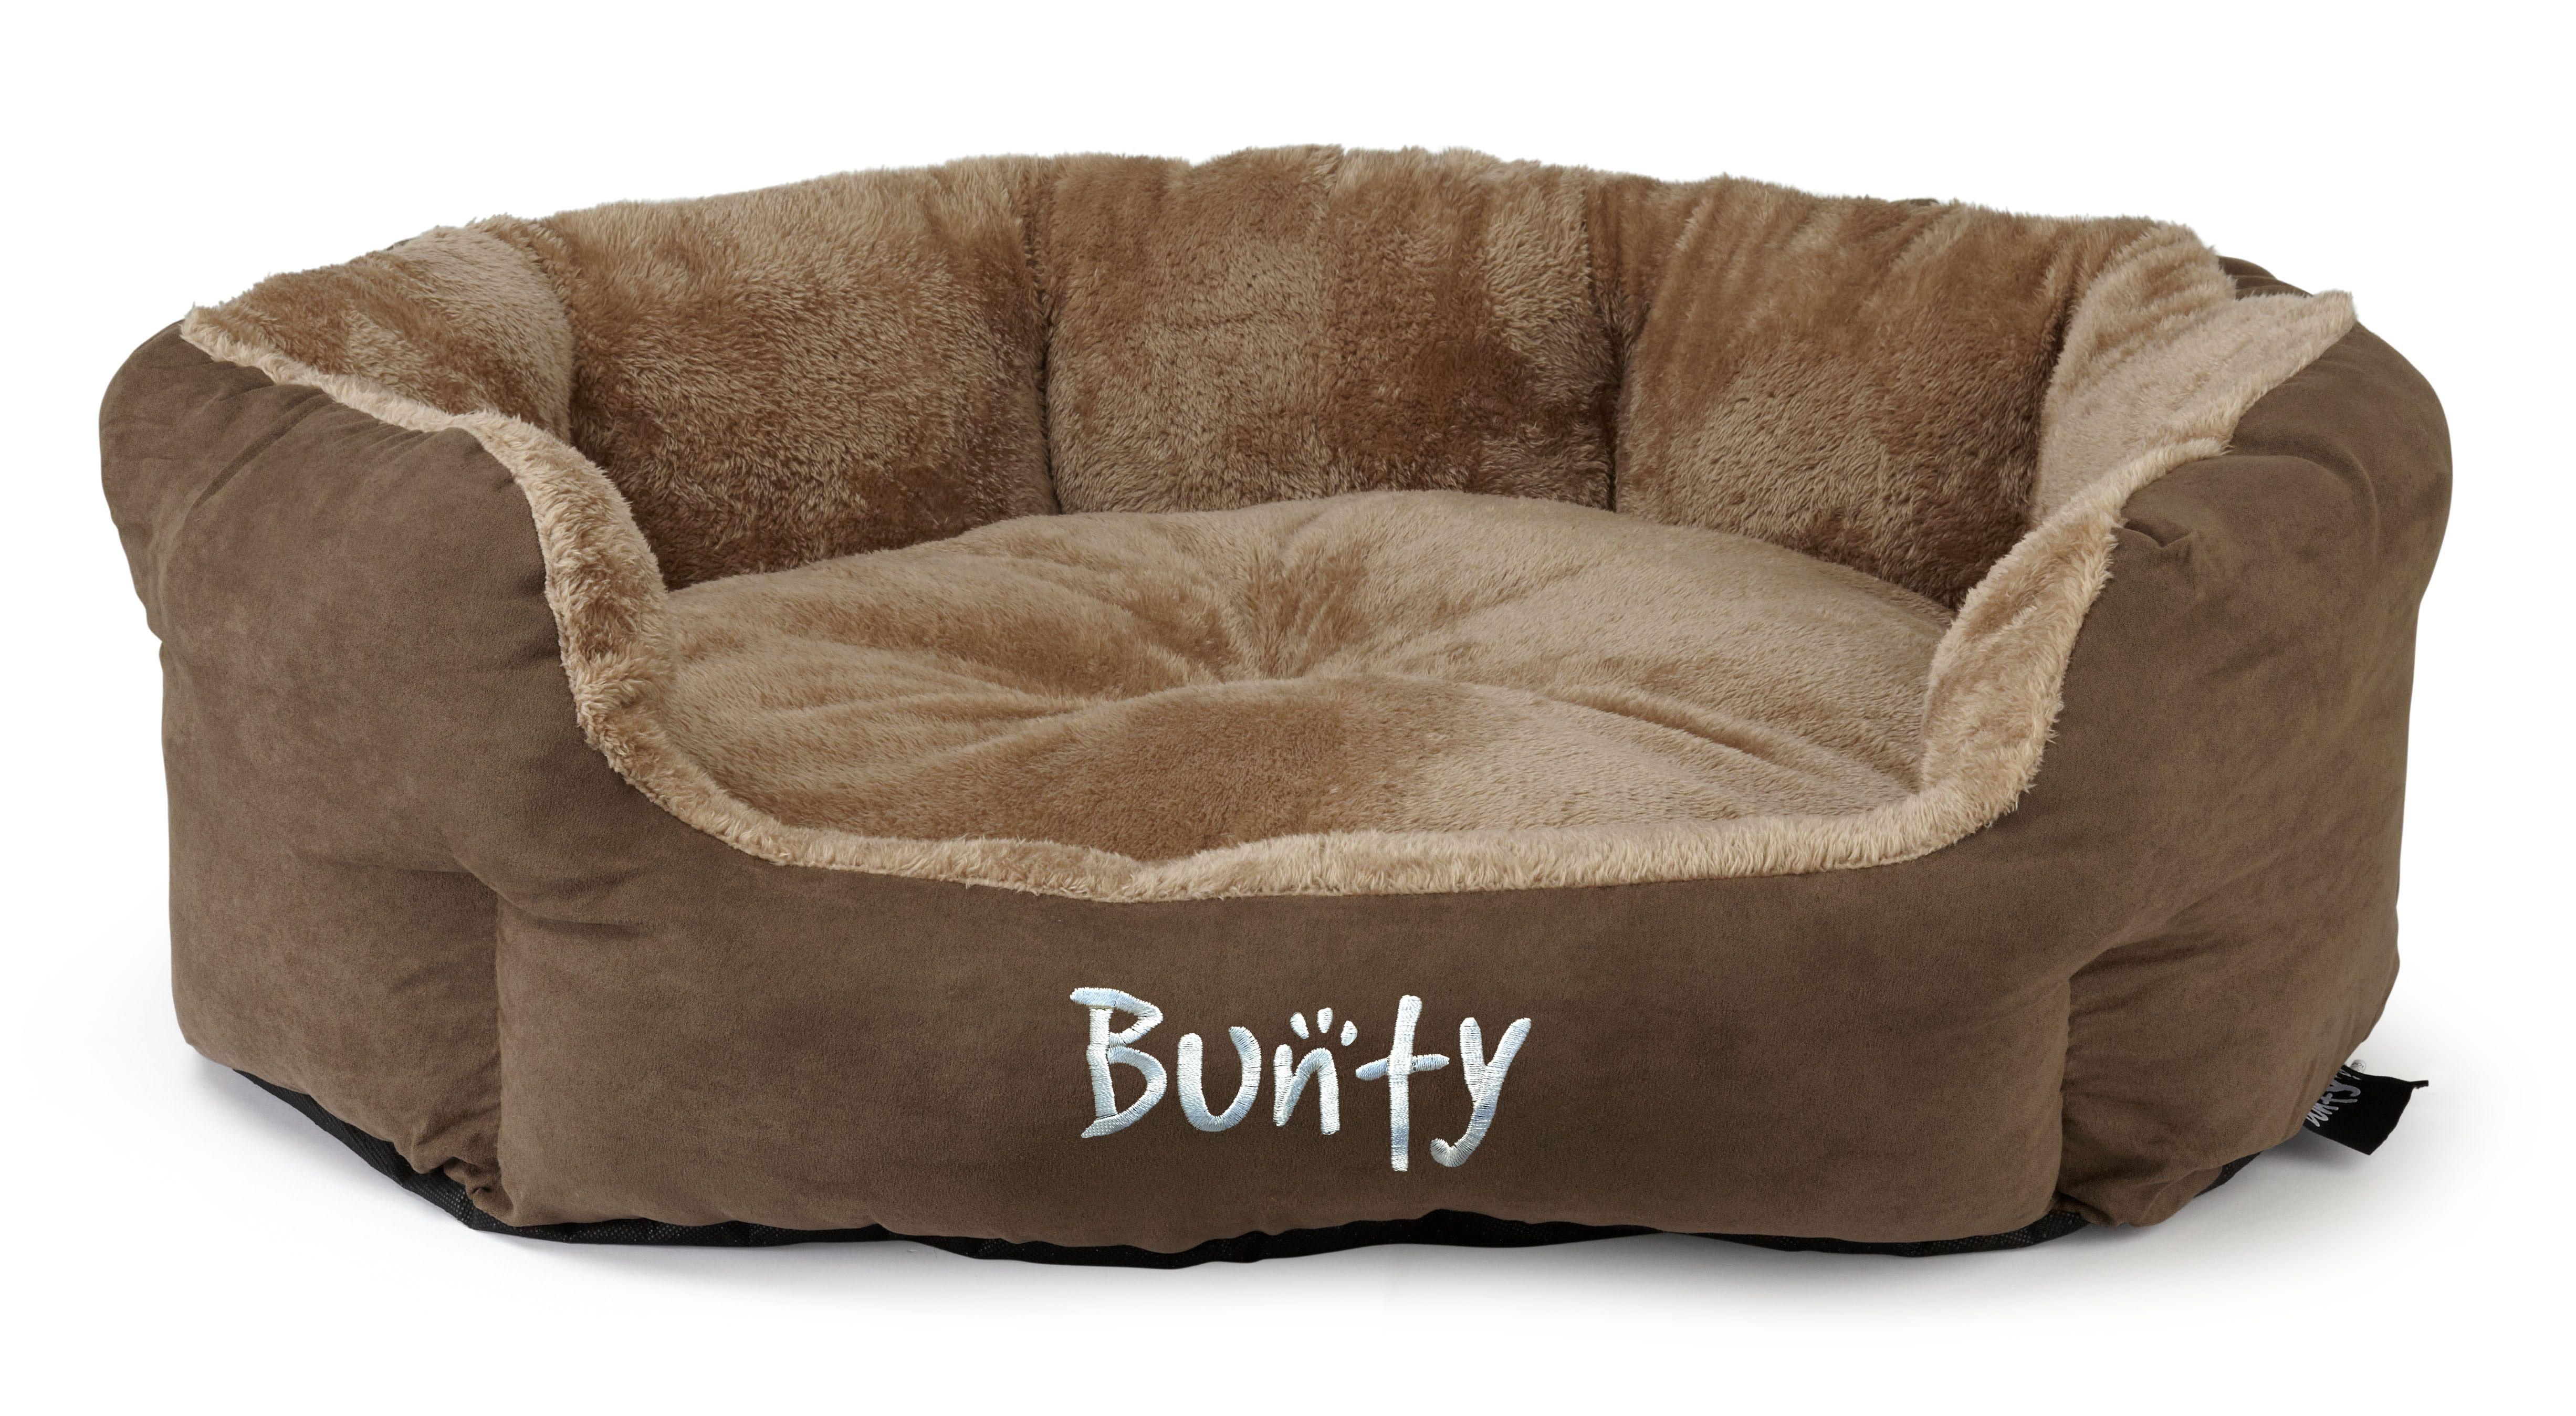 Polar Dog Logo - Bunty Polar Dog Bed Soft Washable Fleece Fur Cushion Warm Luxury Pet ...